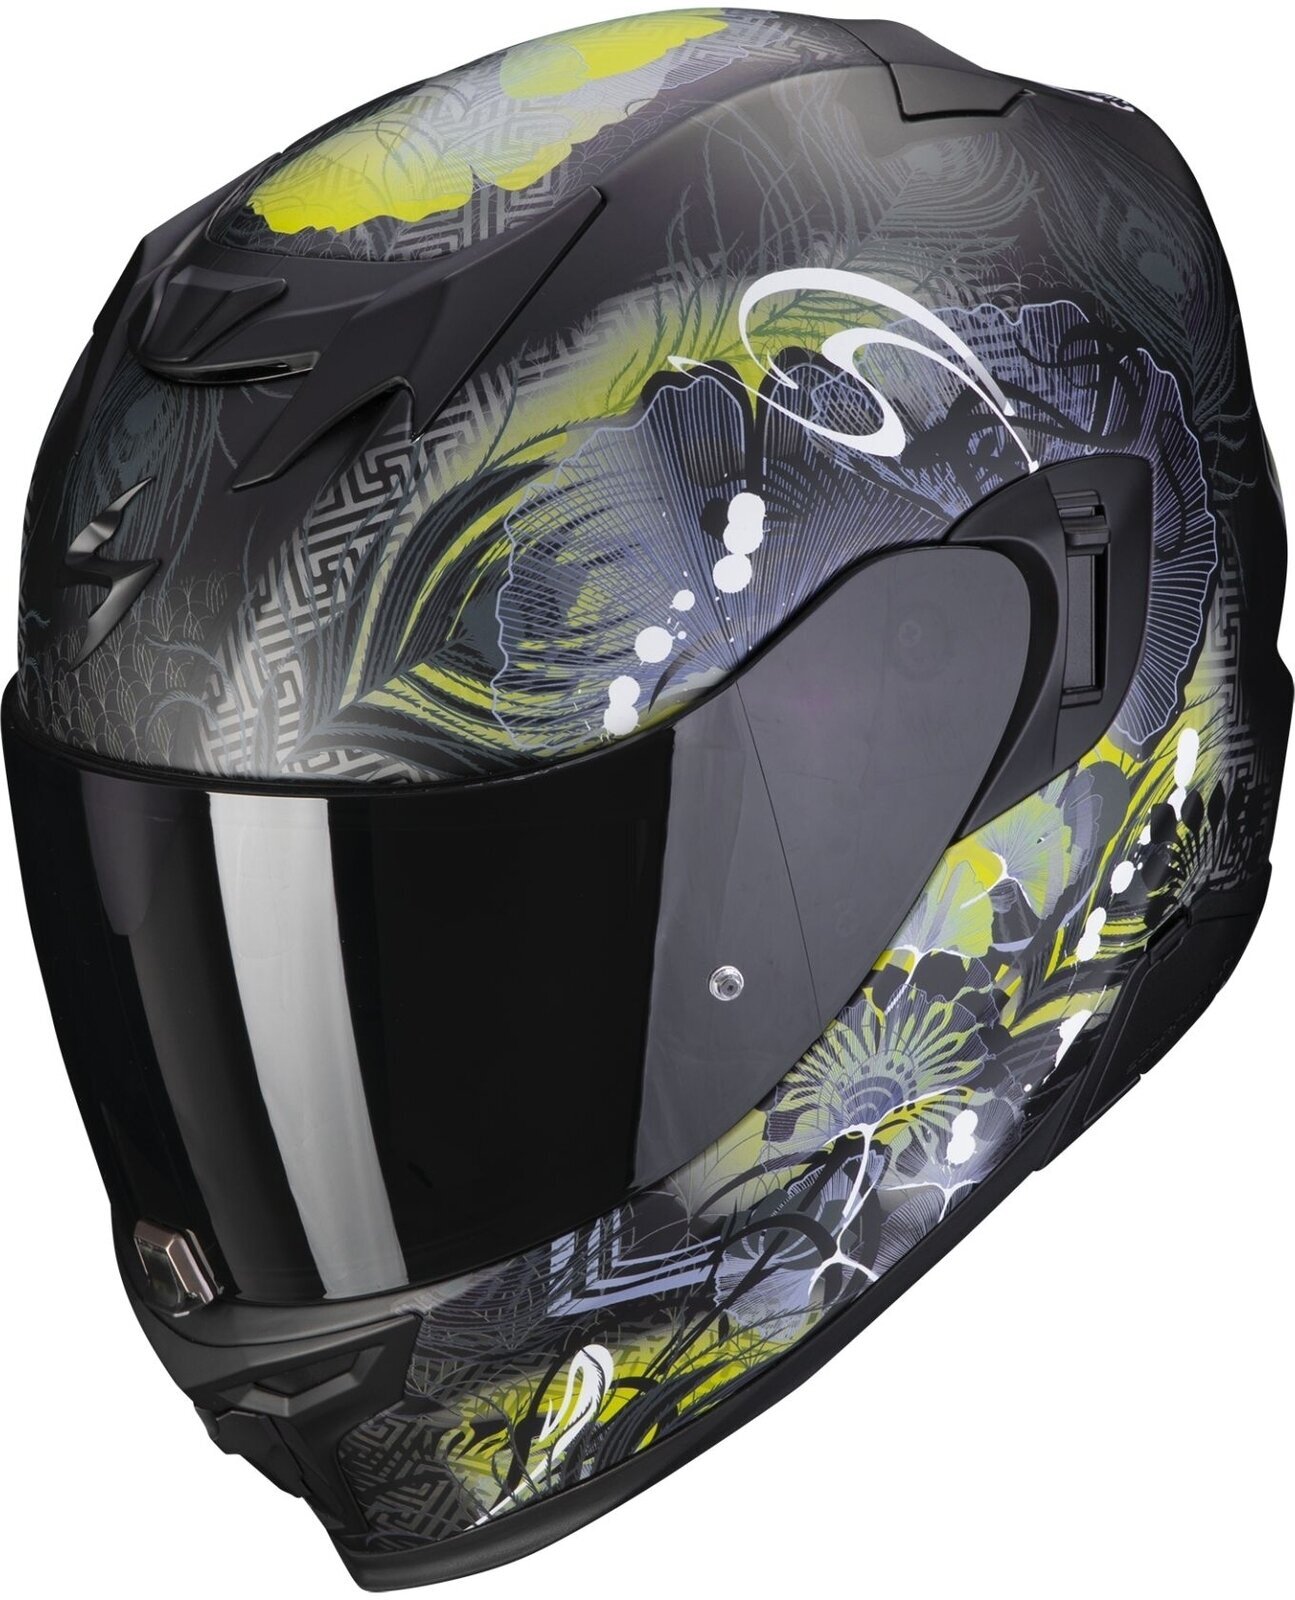 Helm Scorpion EXO 520 EVO AIR MELROSE Matt Black/Yellow S Helm